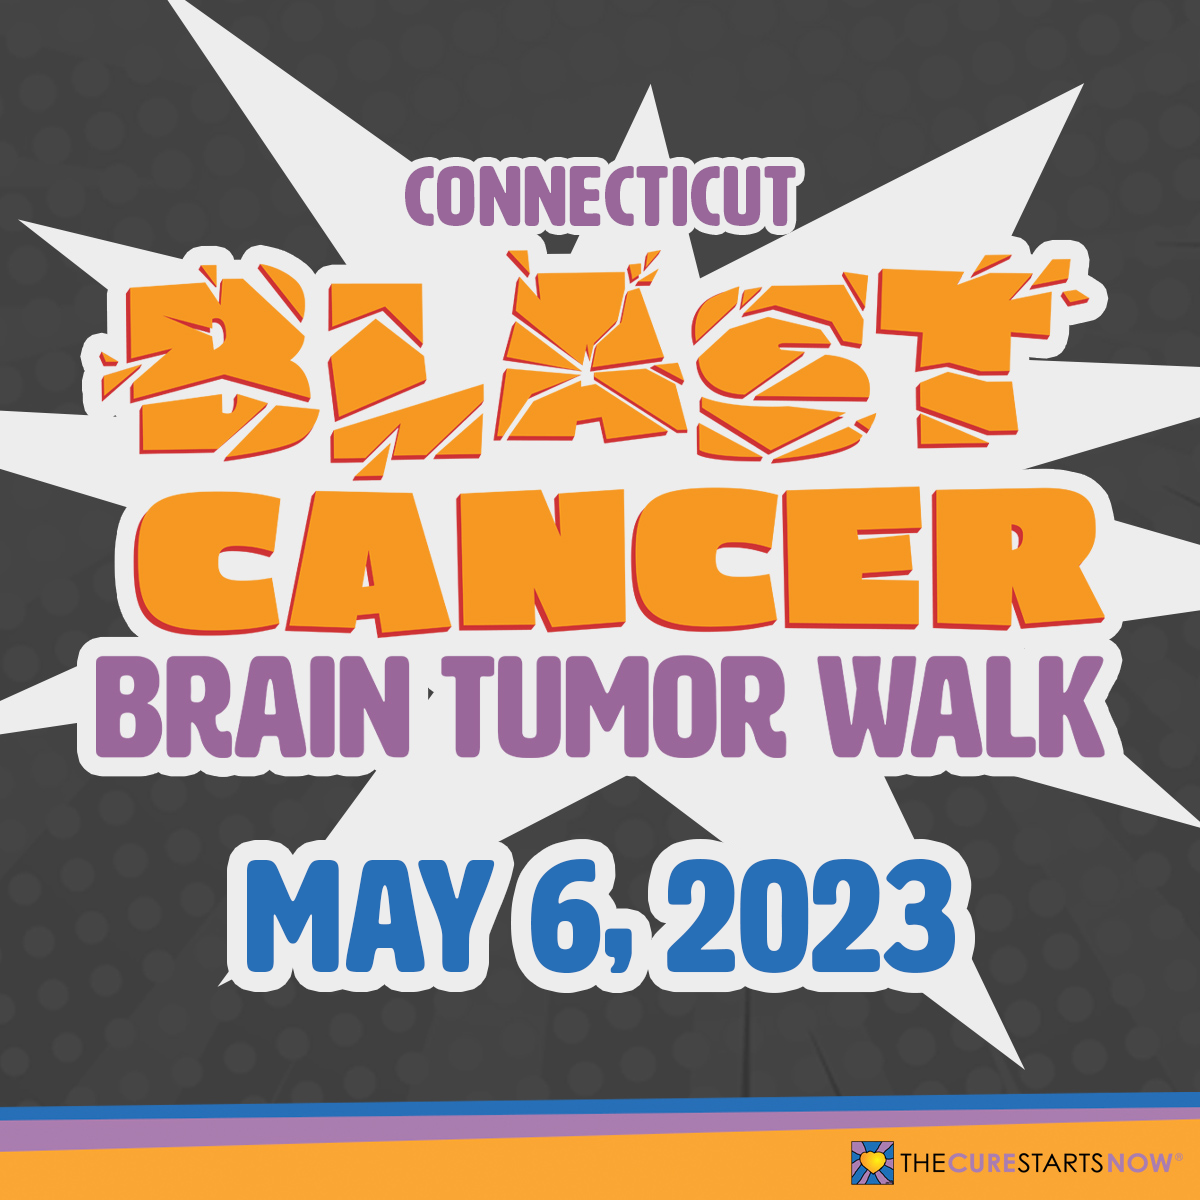 Blast Cancer Walk: Connecticut